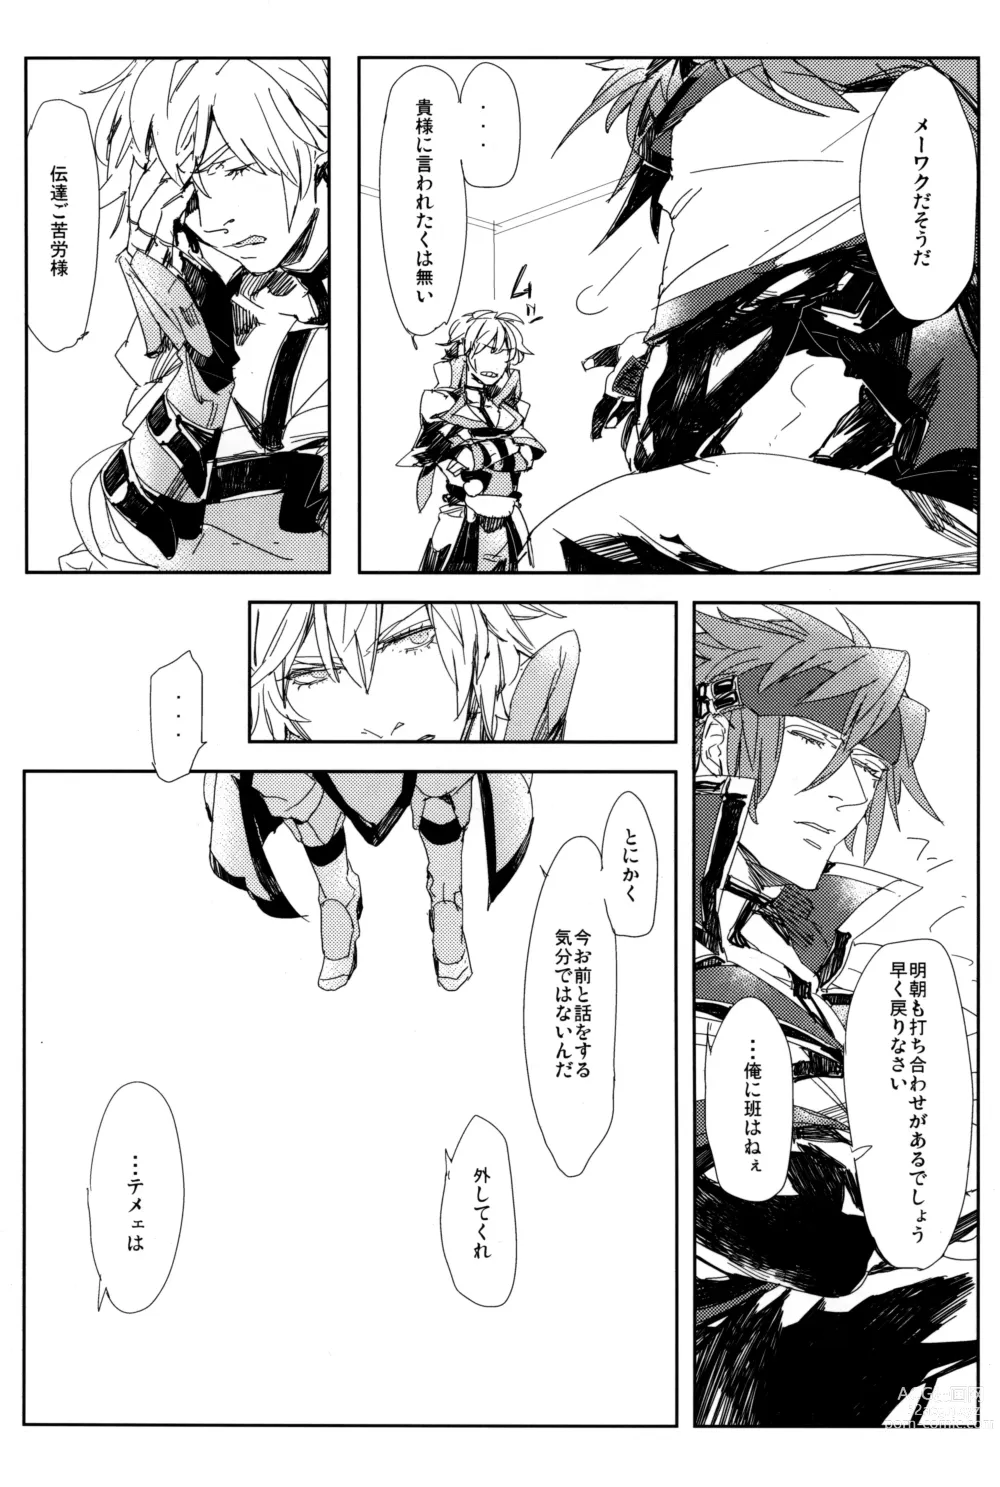 Page 32 of doujinshi Perversion